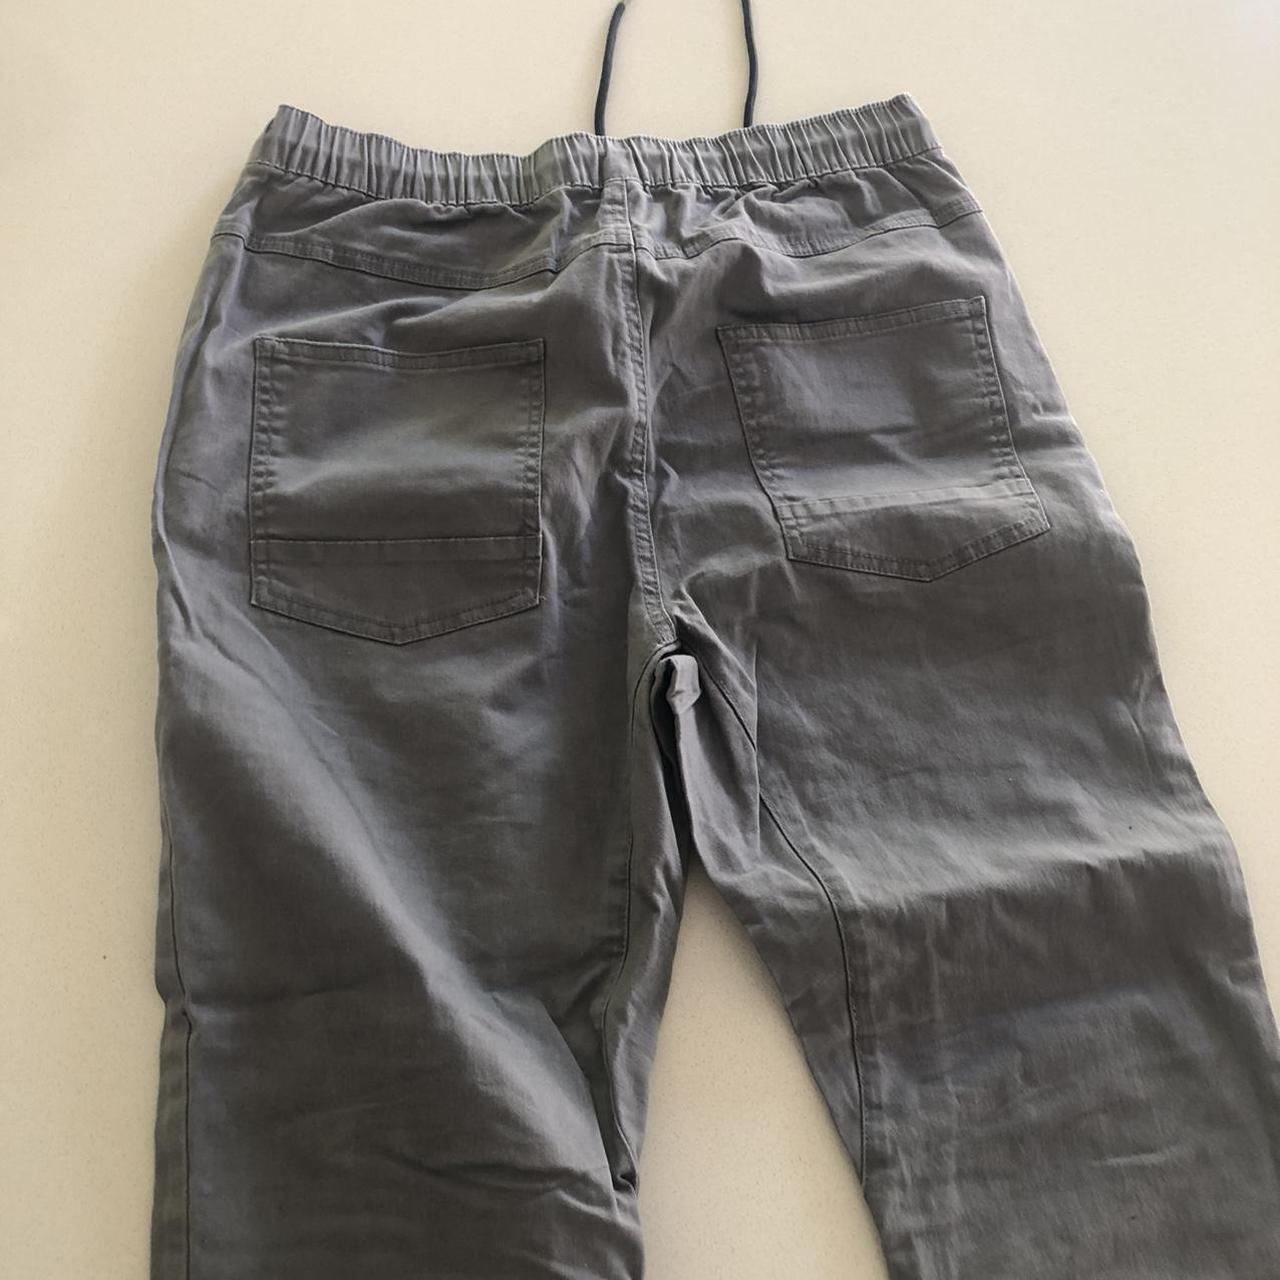 Factorie grey jogger pants. Great condition. Size... - Depop